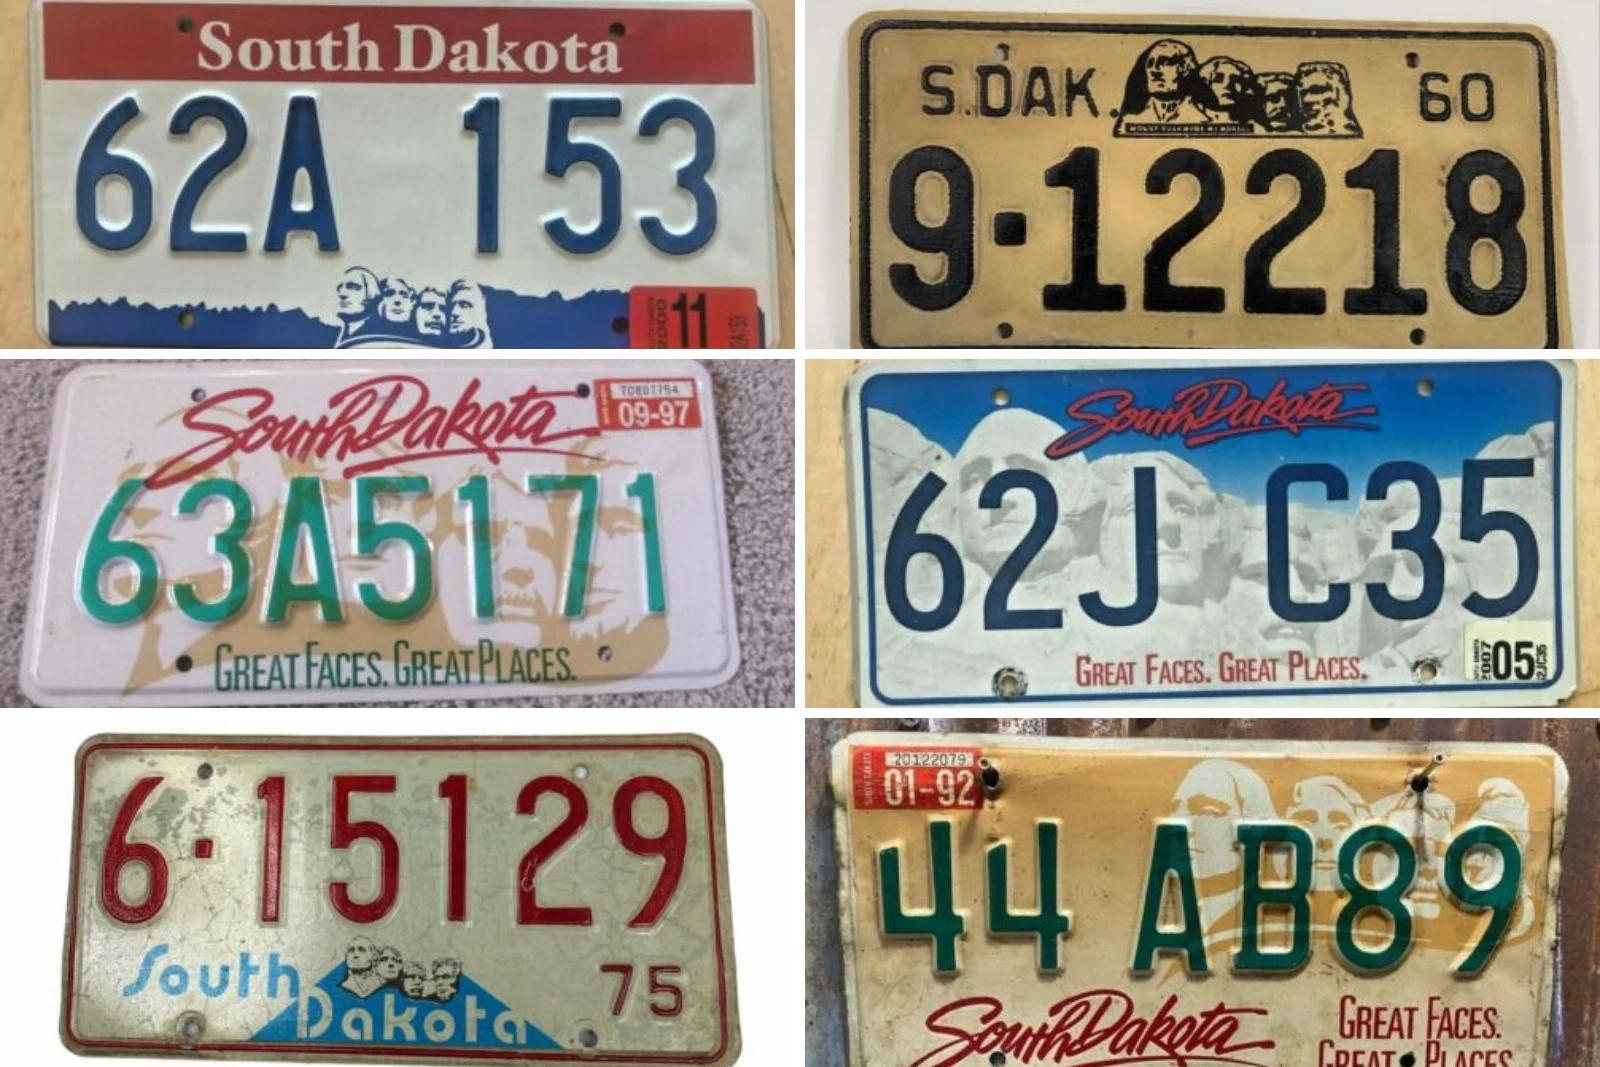 South Dakota's License Plate